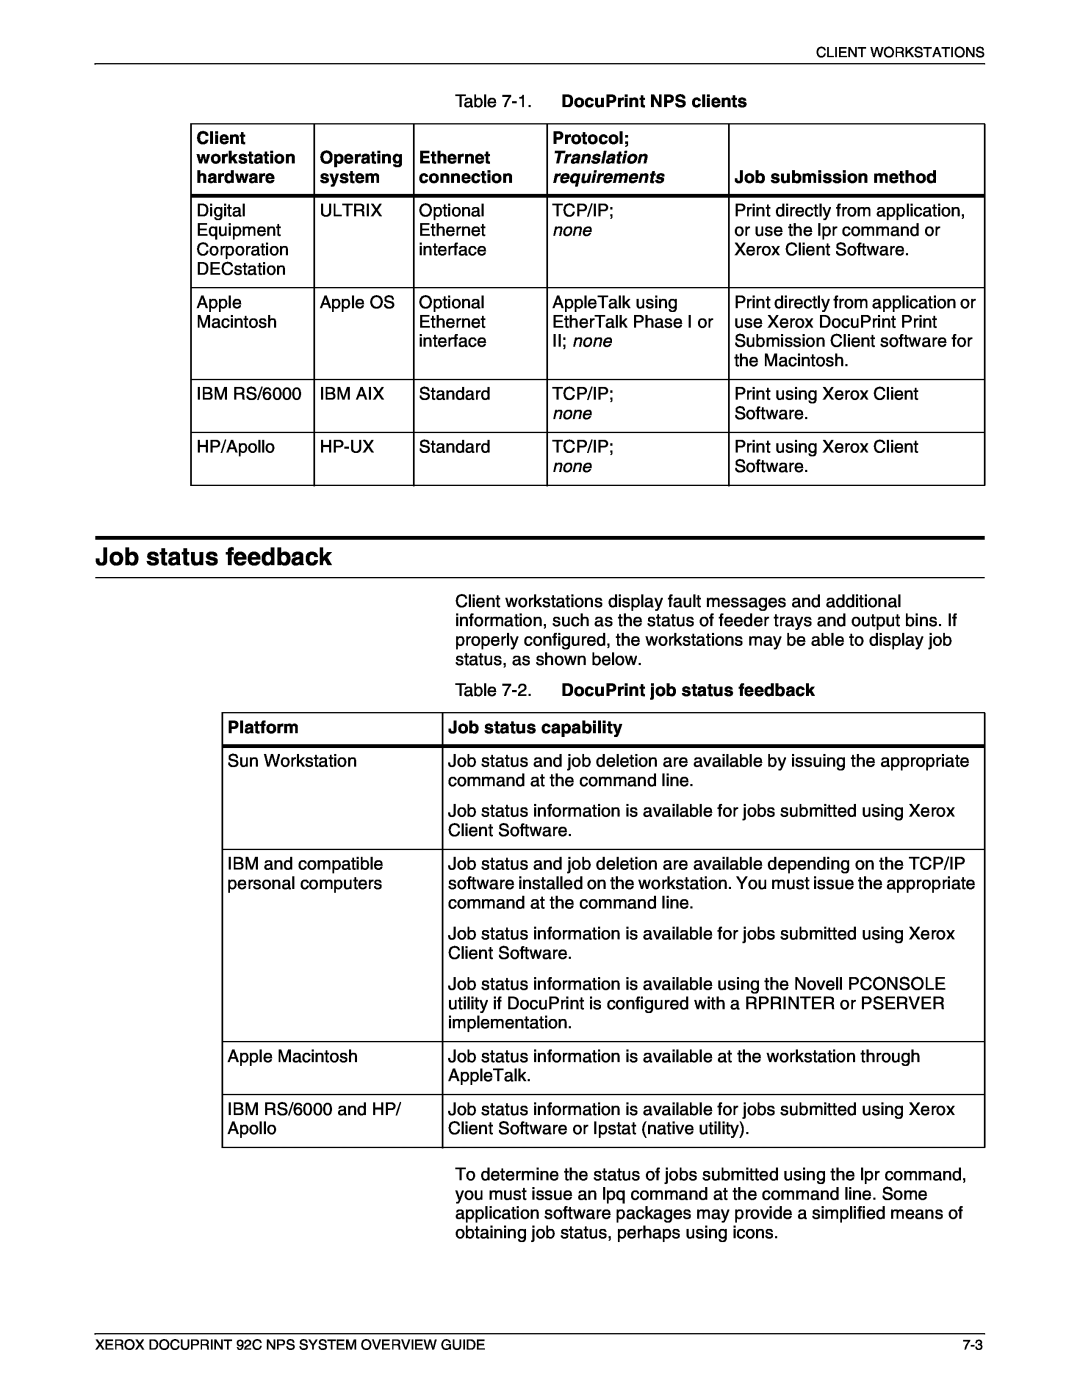 Xerox 92C NPS Job status feedback, 2. DocuPrint job status feedback, Platform, Job status capability, Client, Protocol 